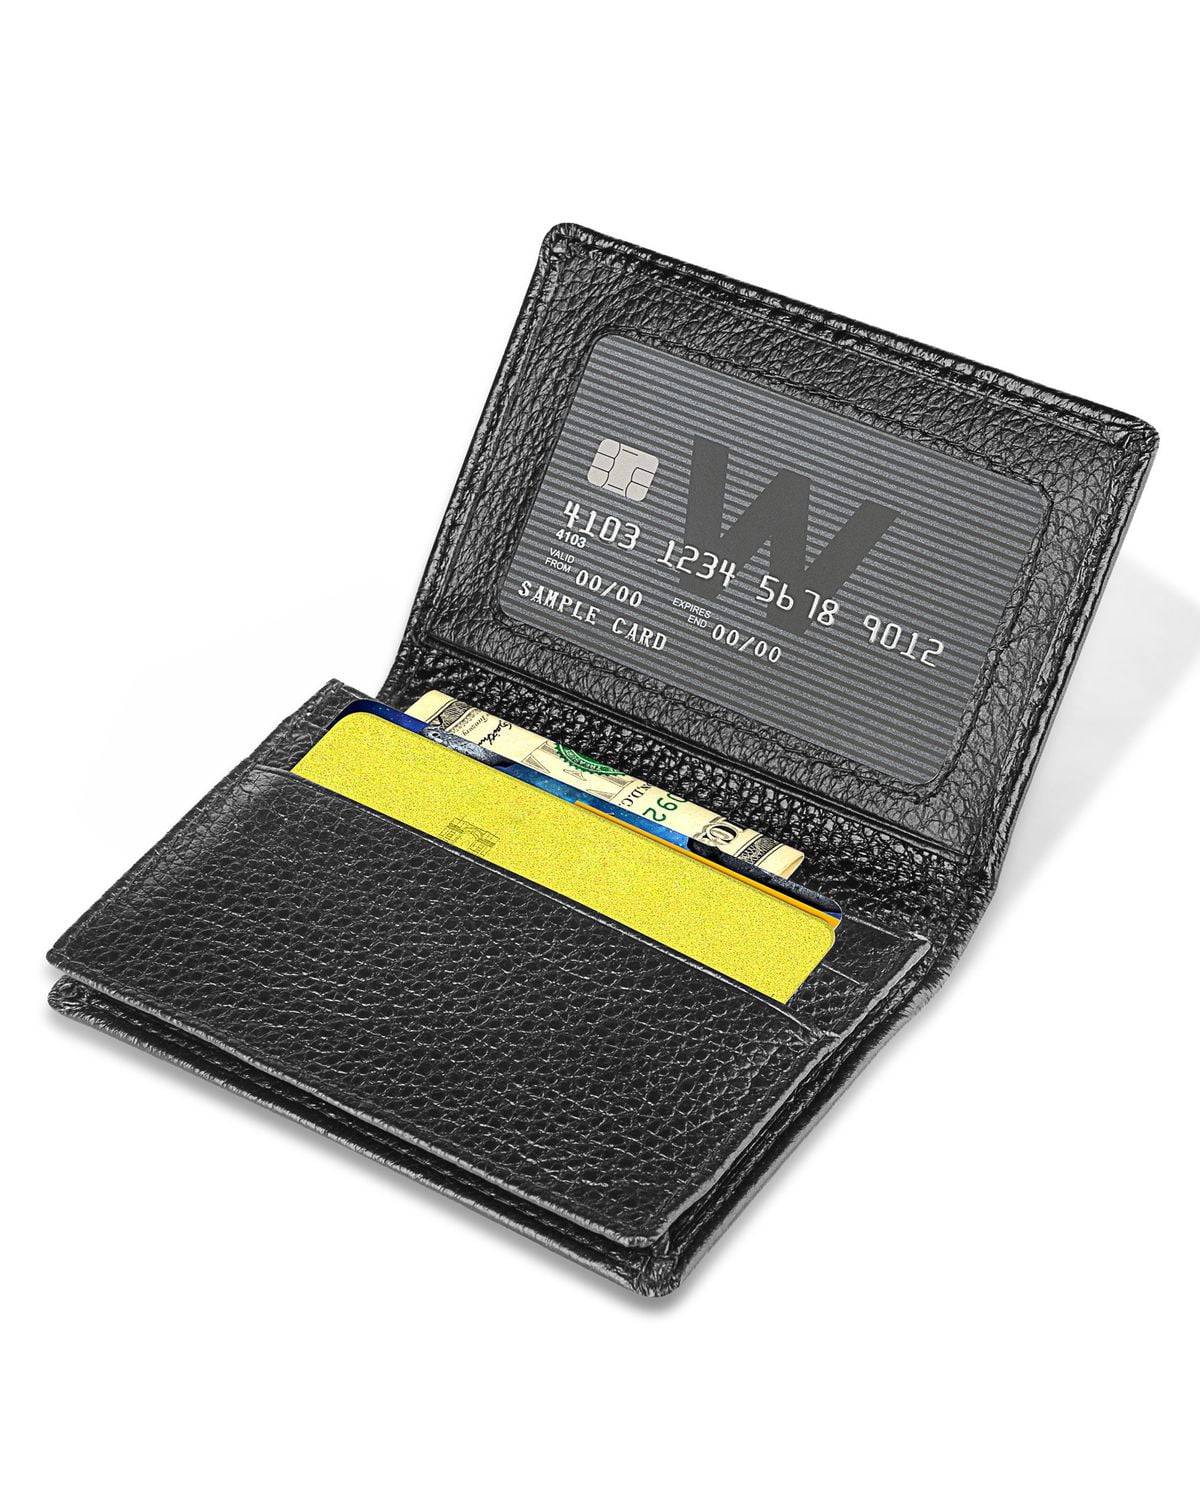 Zodaca Men's Genuine Leather Card Holder ID Credit Case Money Holder - Black (Gift Idea ...